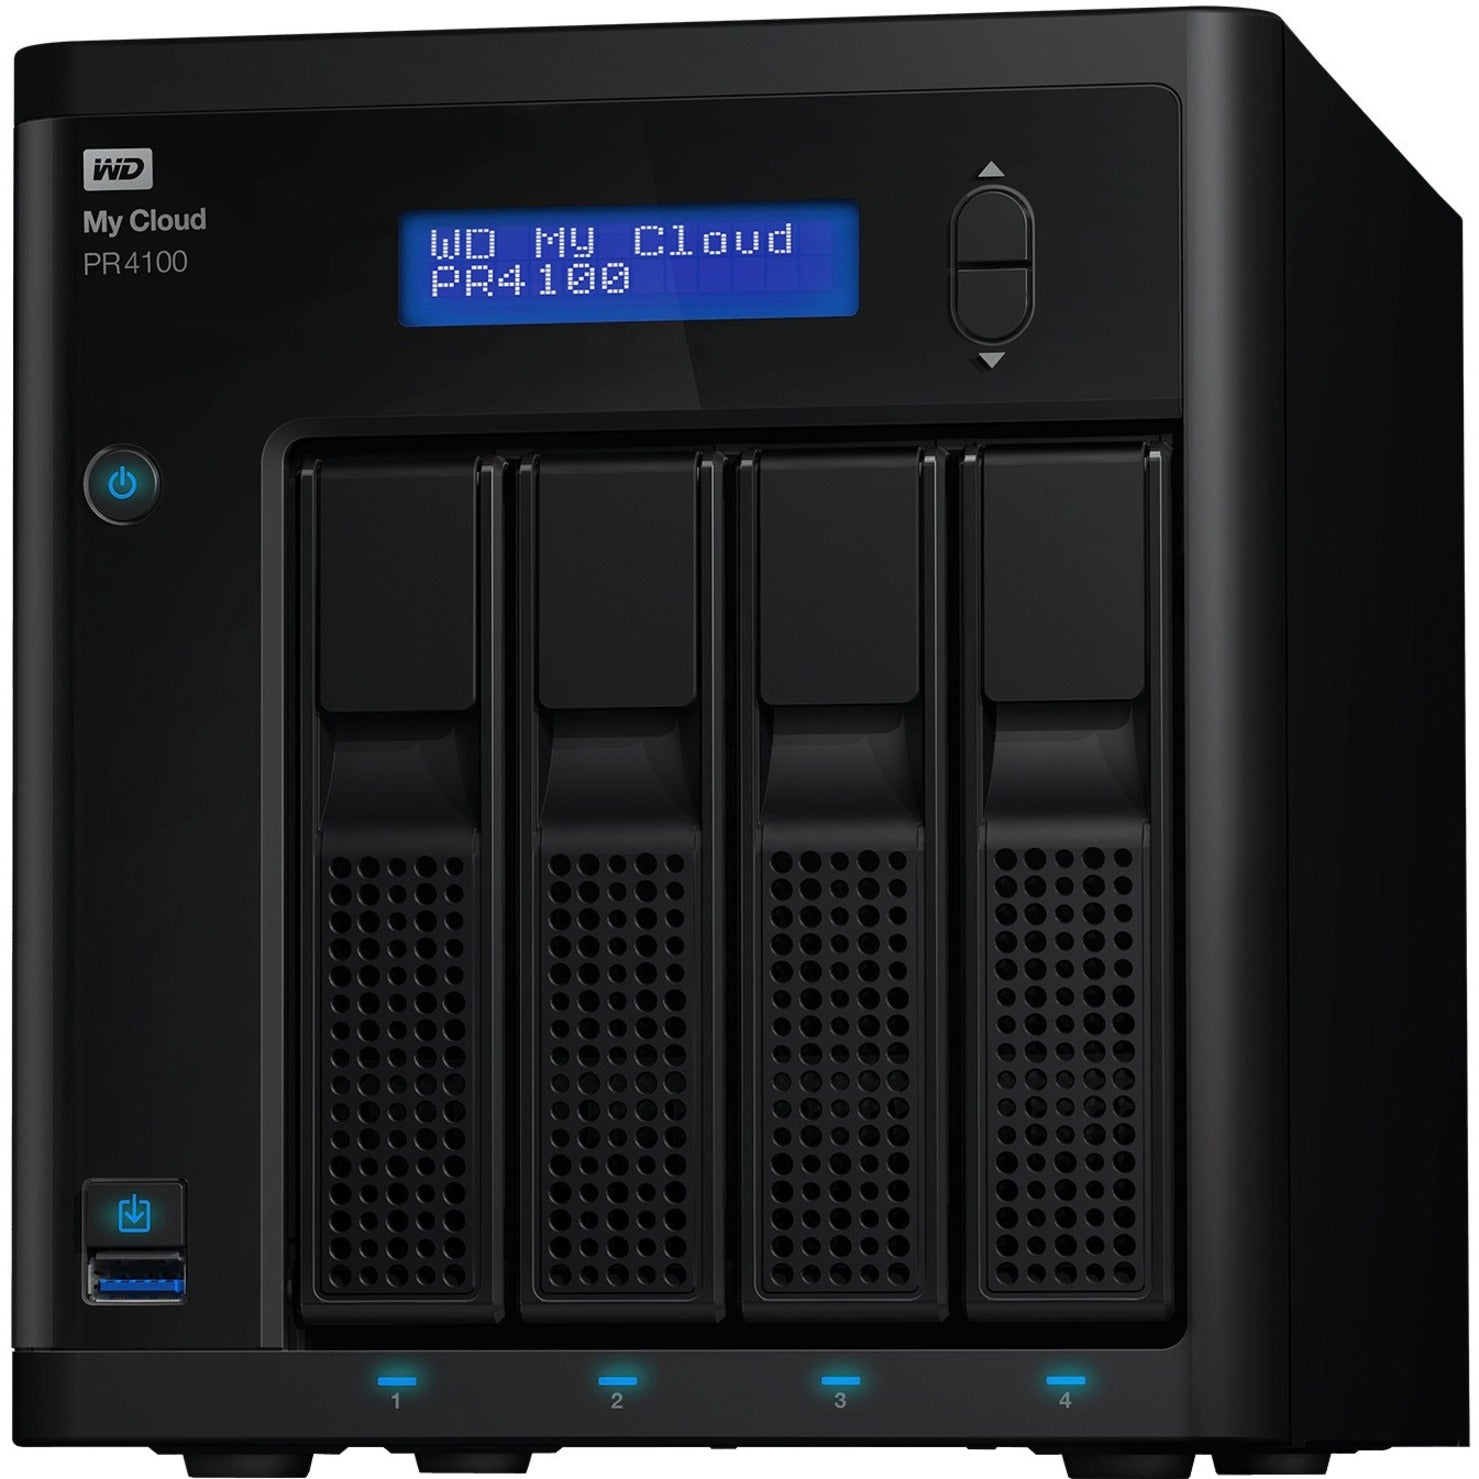 WD WDBNFA0080KBK-NESN My Cloud PR4100 Pro Series Media Server, 8TB NAS with Transcoding